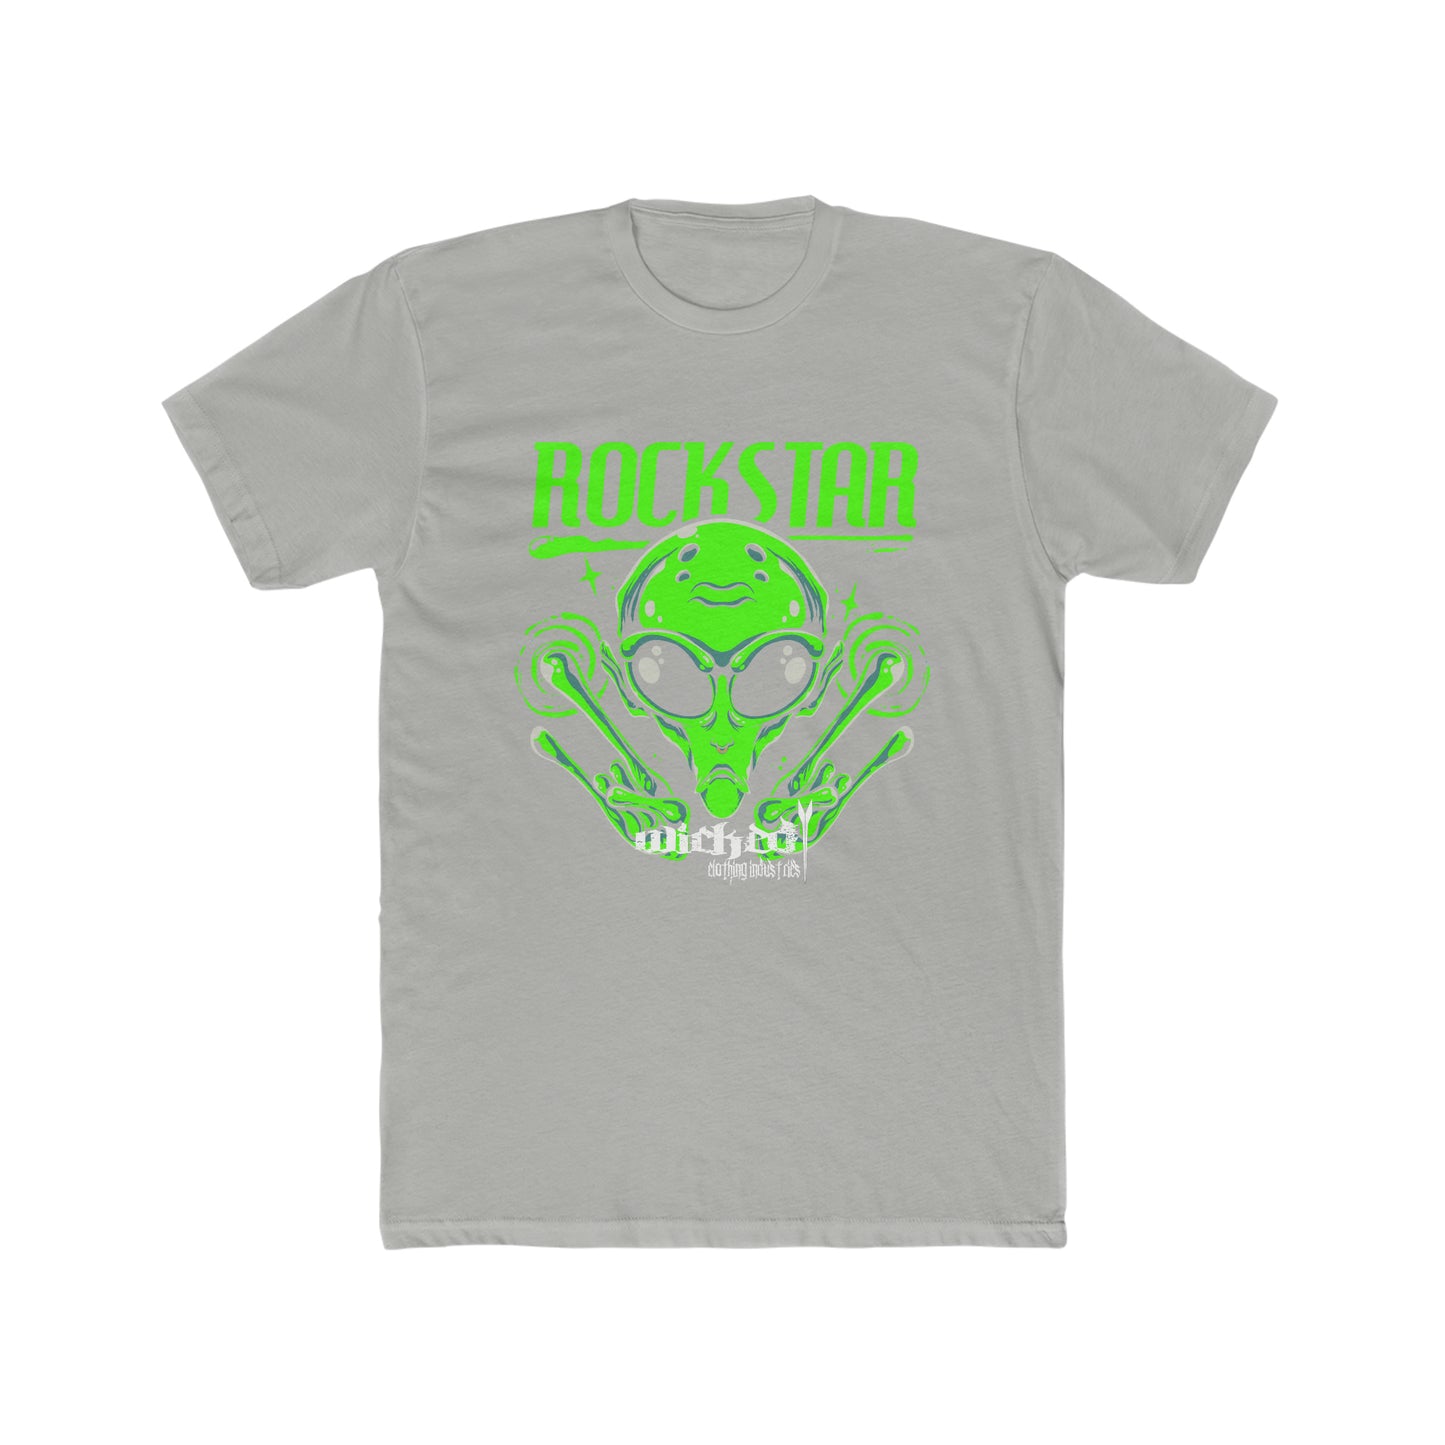 Rockstar Alien T-Shirt